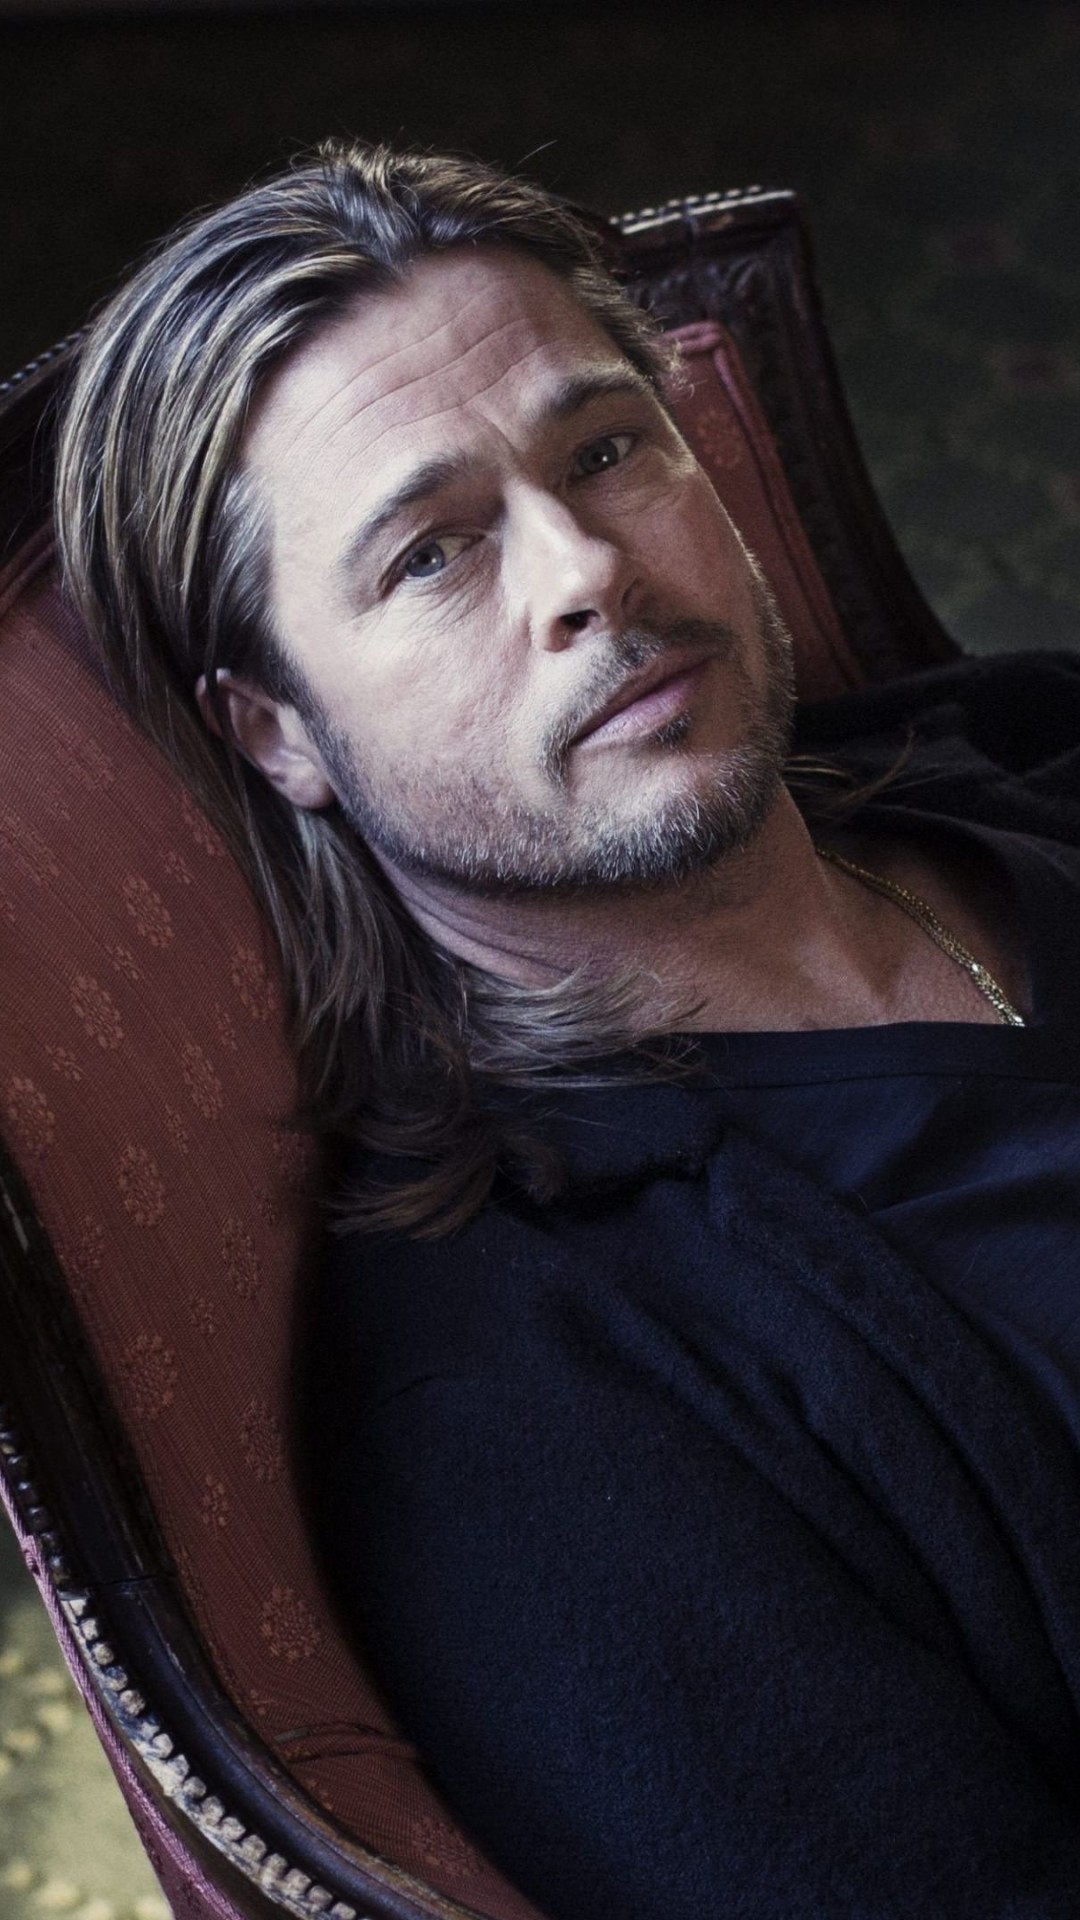 Brad Pitt Sitting On Chair Wallpaper for SAMSUNG Galaxy S4